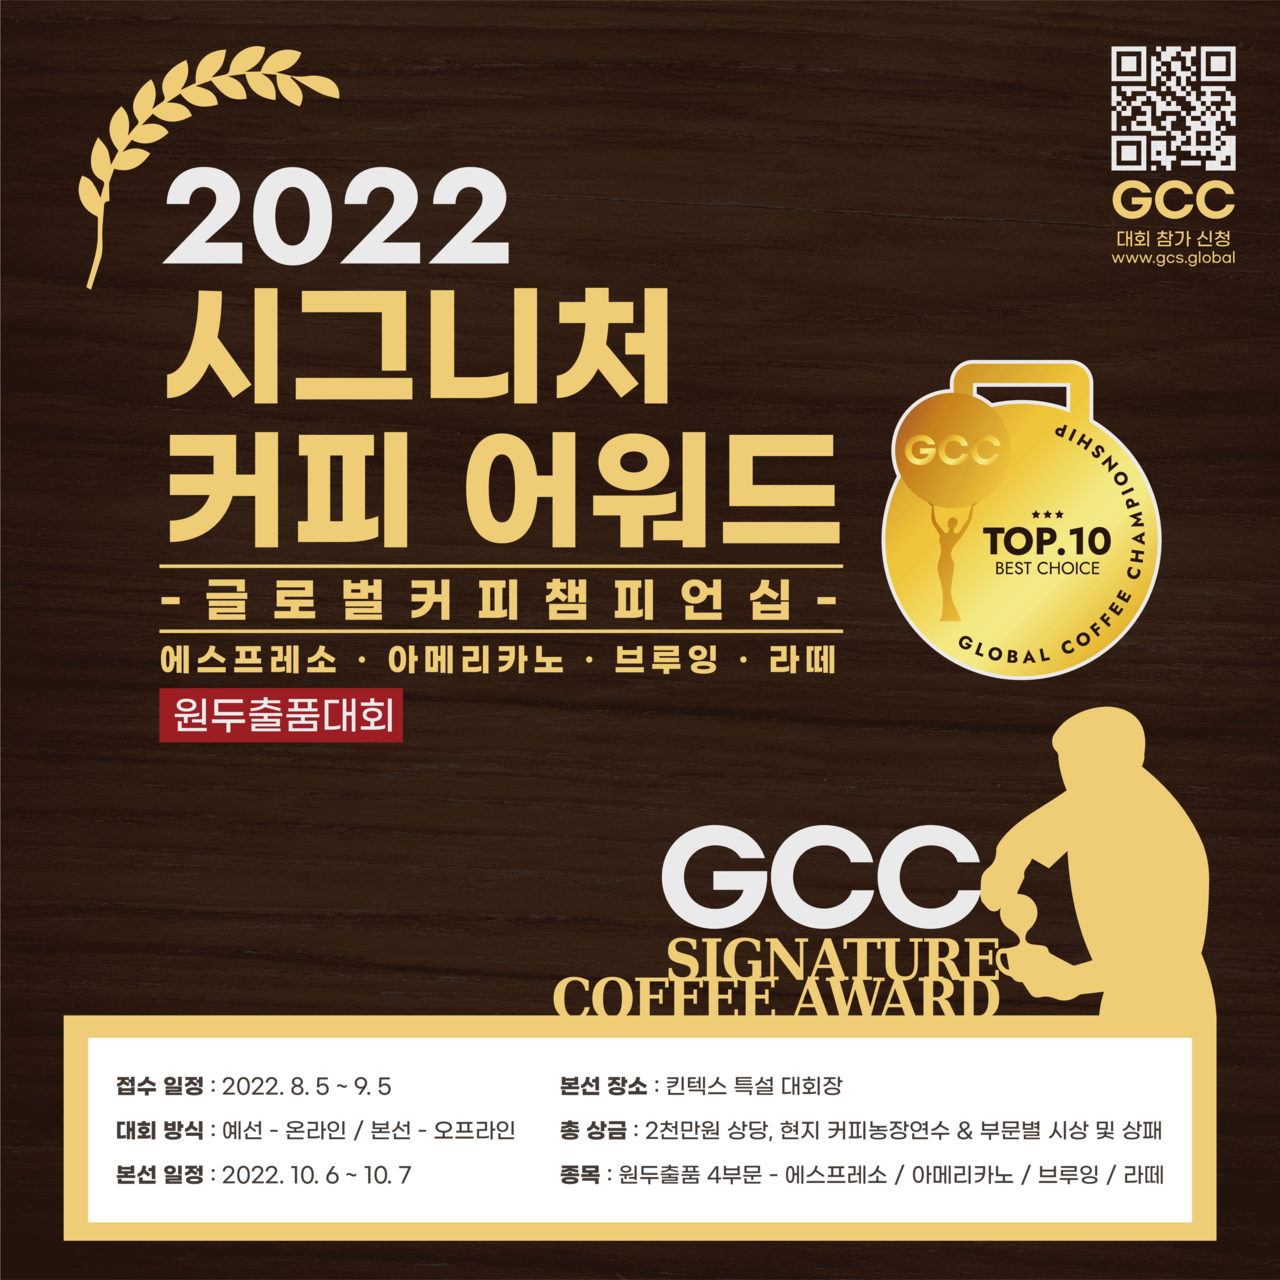 2022 GCC SIGNATURE COFFEE AWARD